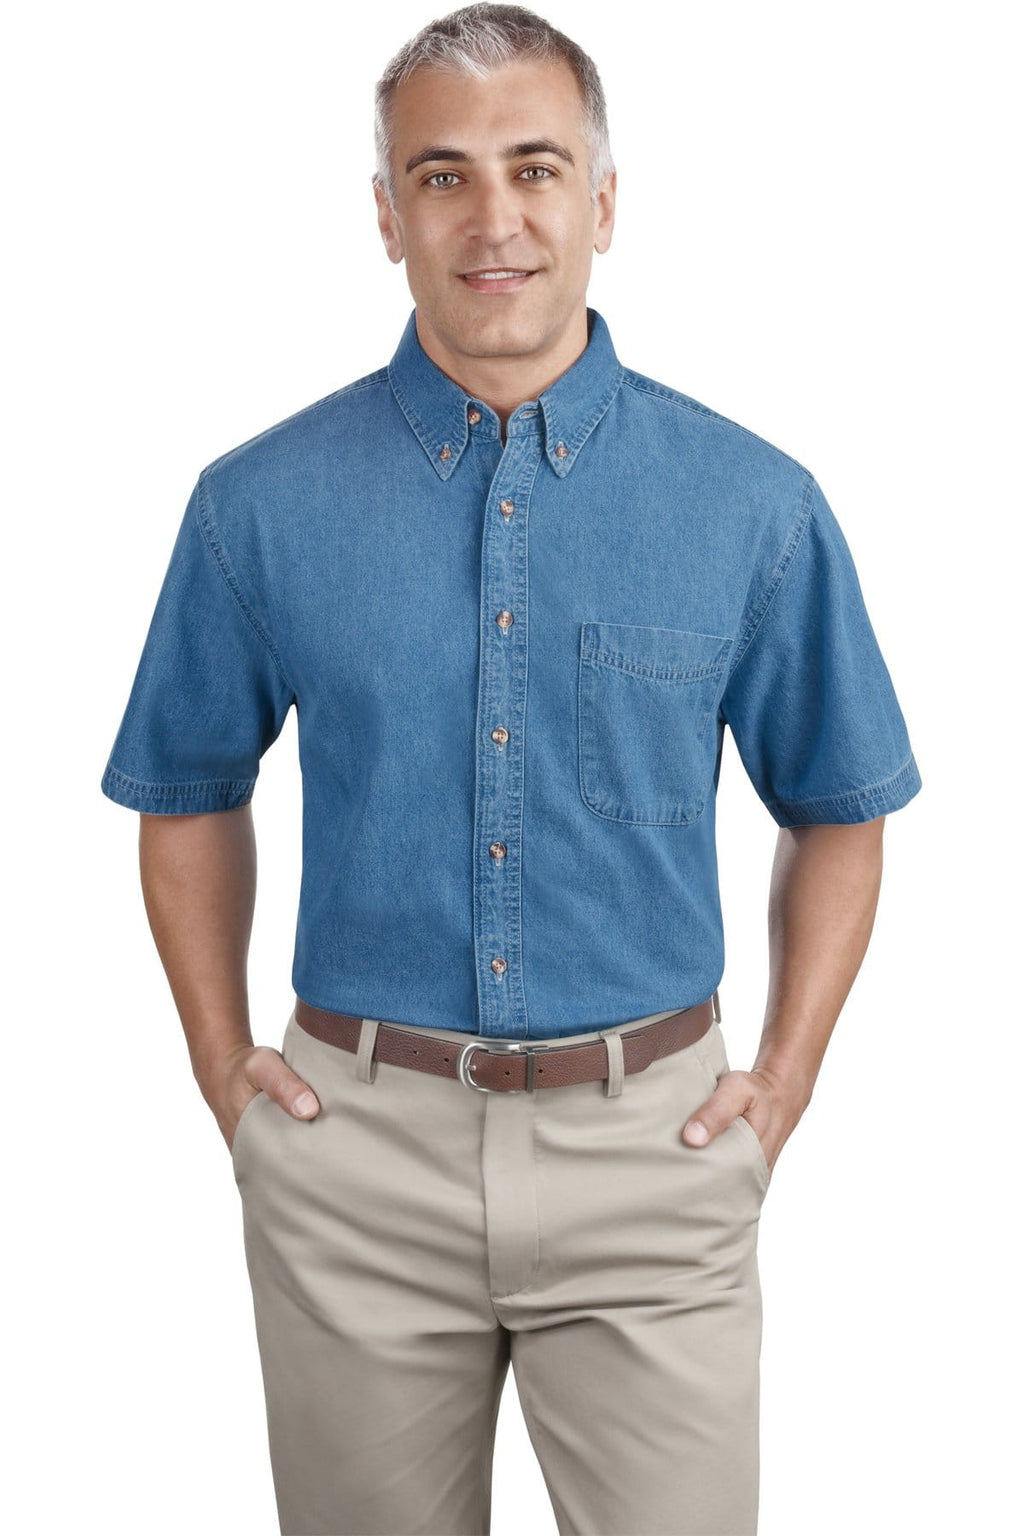 Port & Company Short Sleeve Value Denim Shirt faded blue